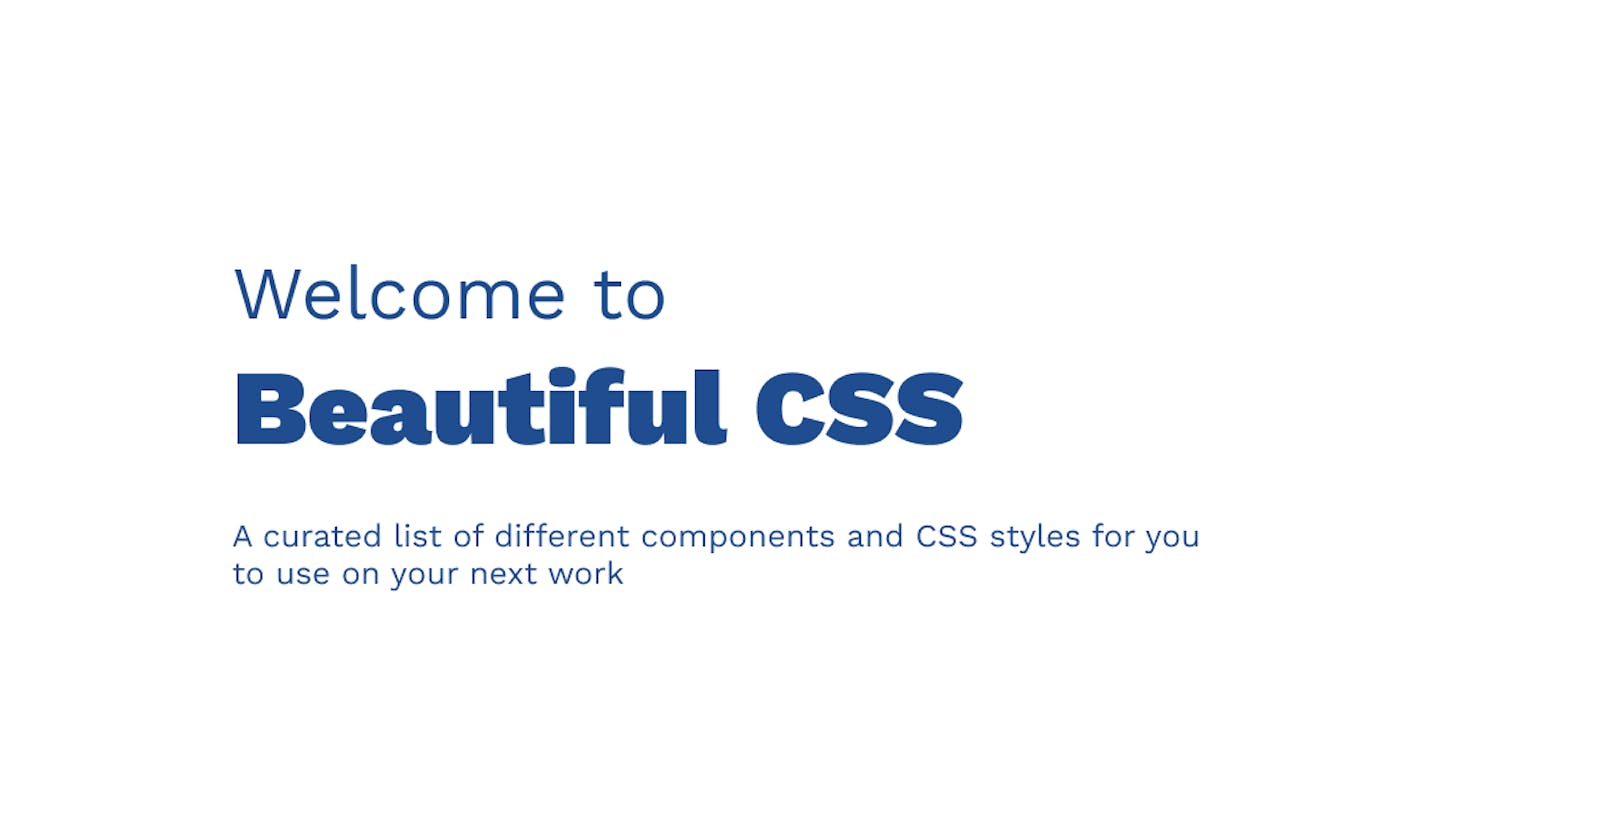 Announcing 'Beautiful CSS'